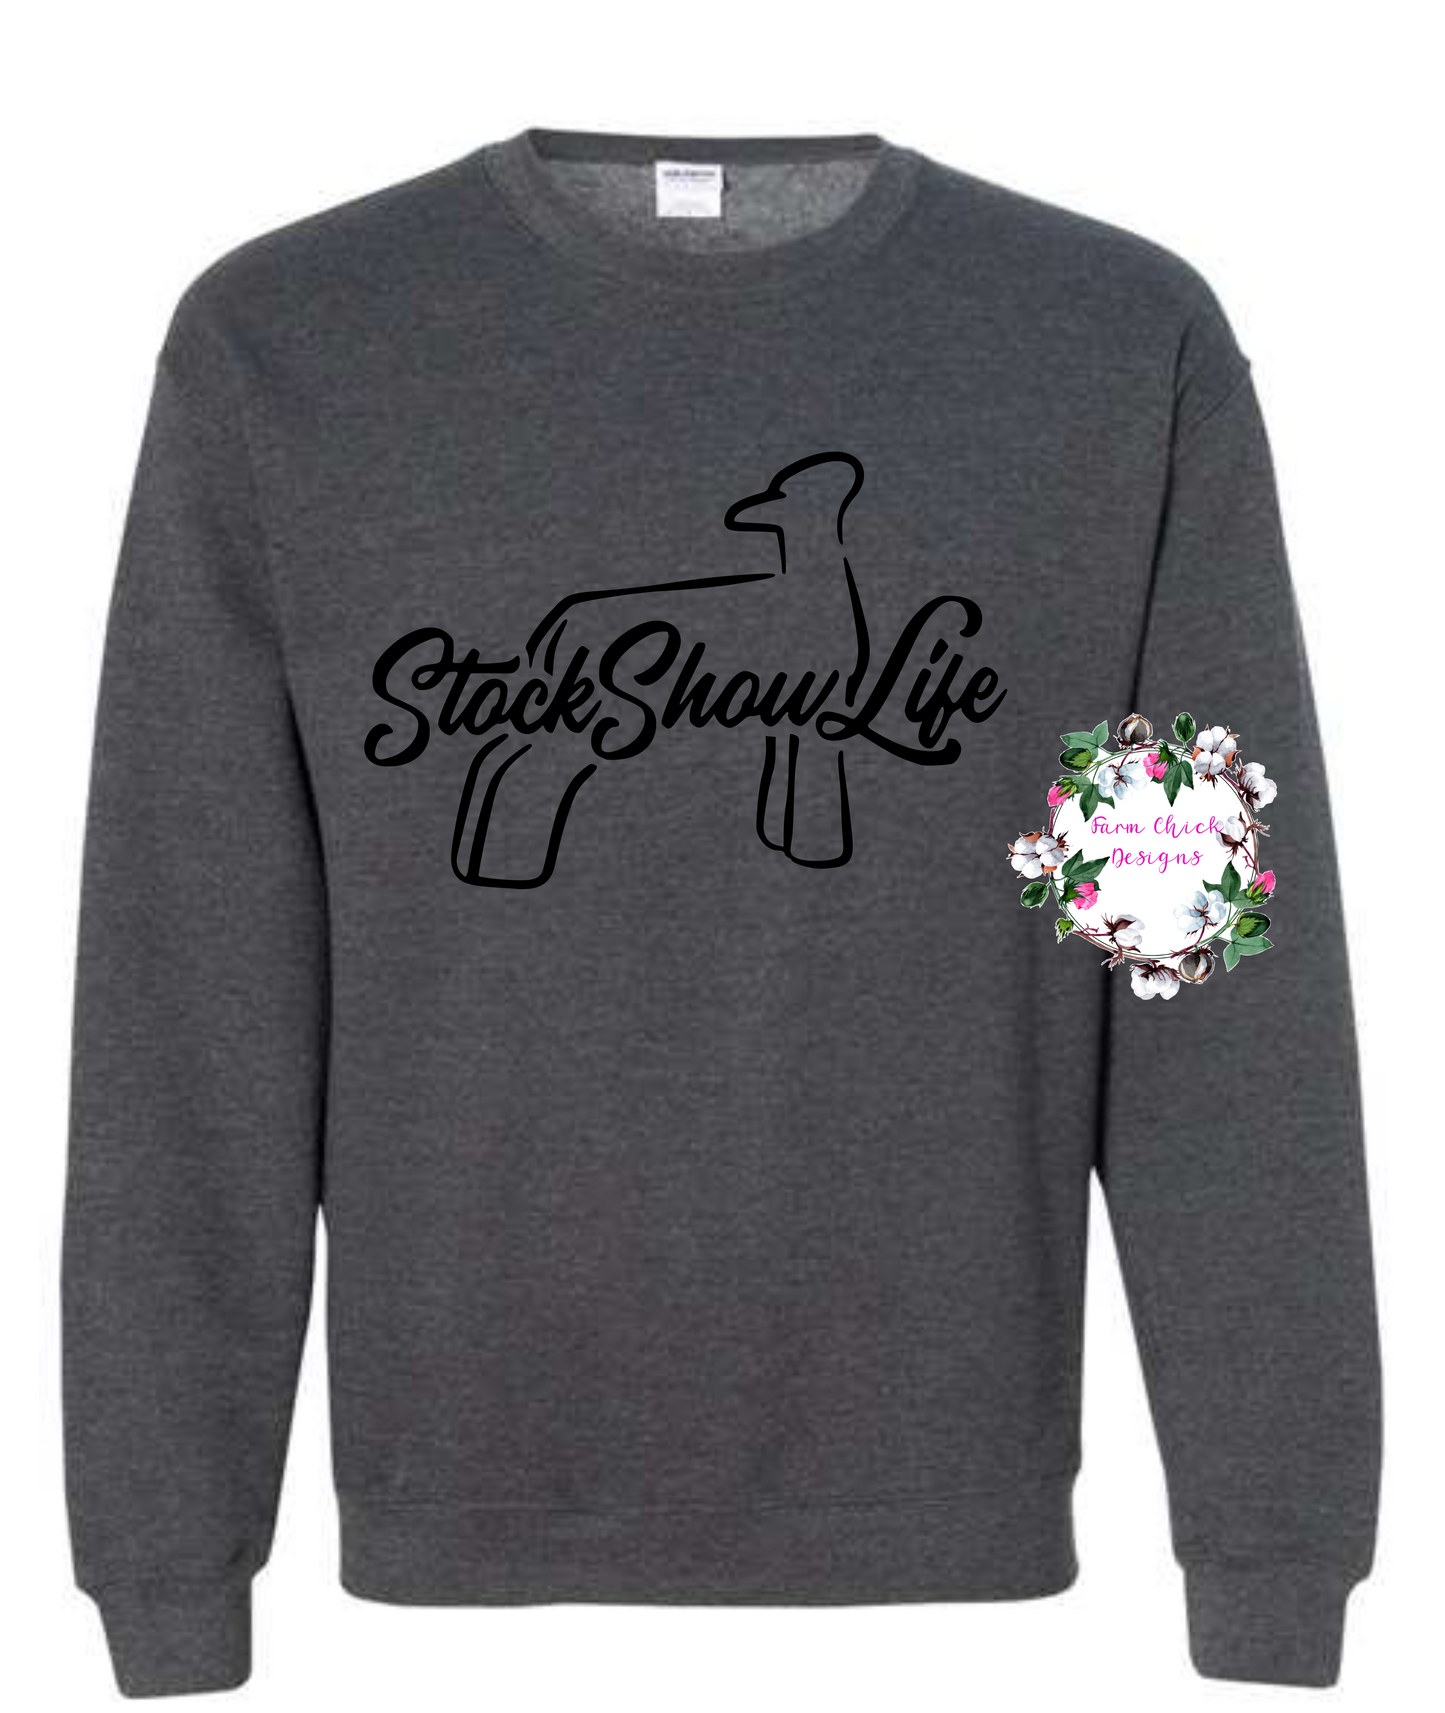 Show Lamb Stock Show Life Youth Sweatshirt